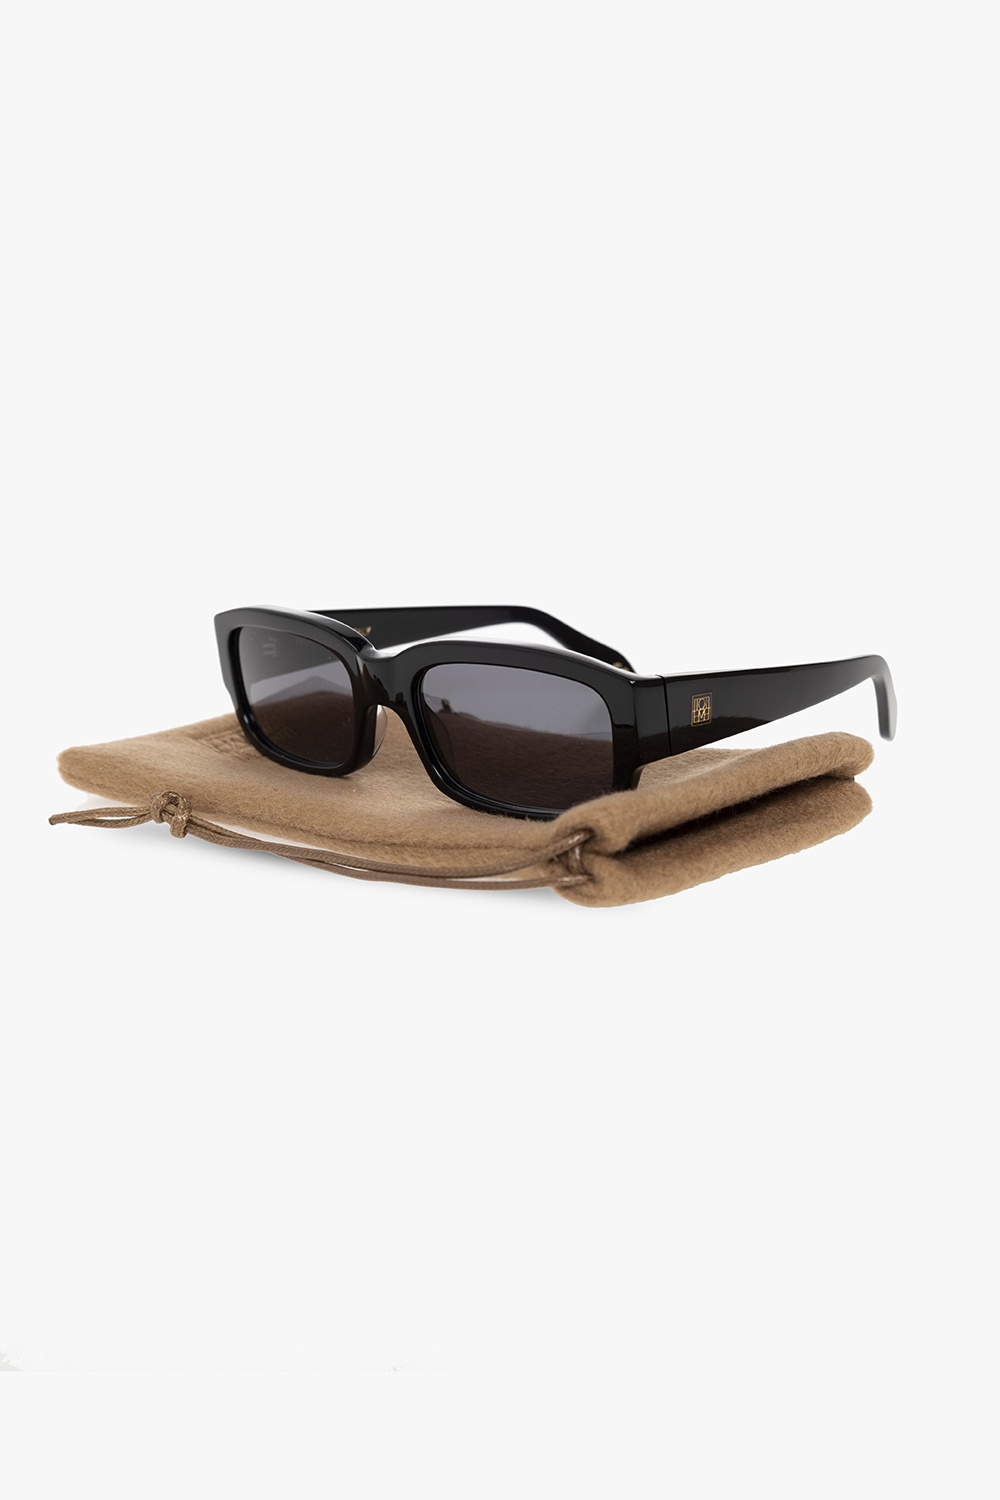 Totême ‘The Regulars’ Hackett sunglasses